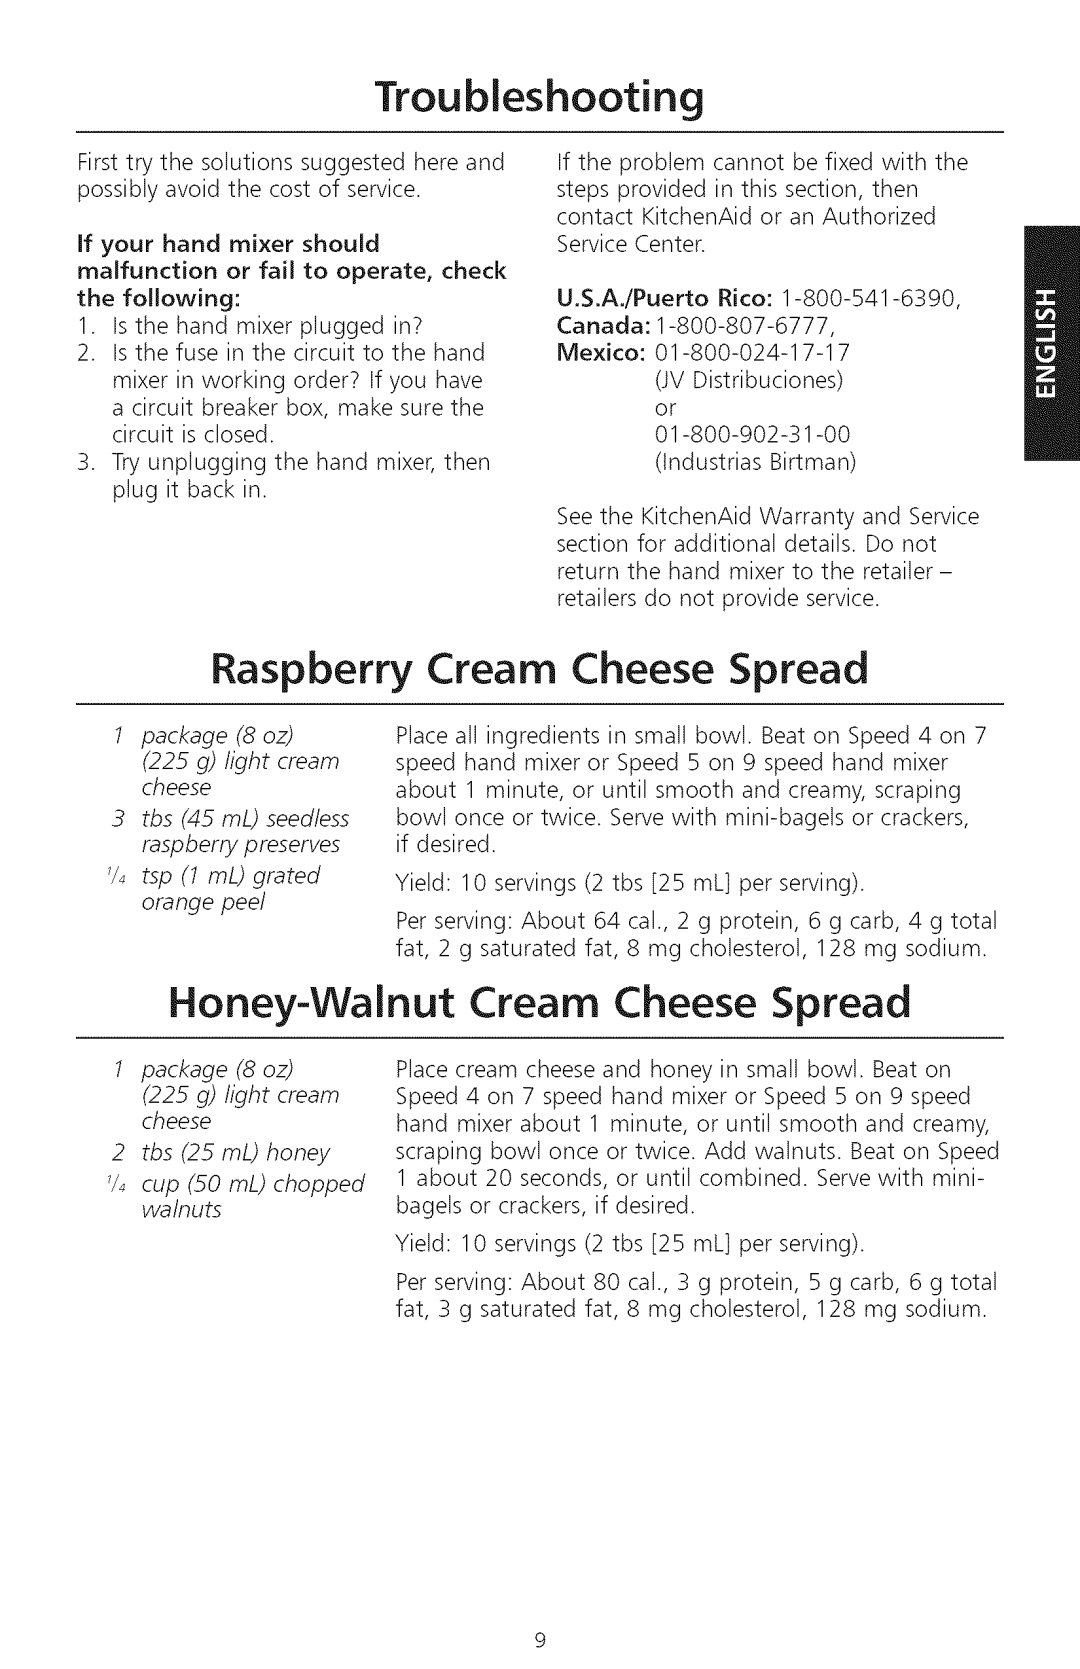 KitchenAid KHM720, KHM920 manual Troubleshooting, Raspberry Cream Cheese Spread, Honey-Walnut Cream Cheese Spread 